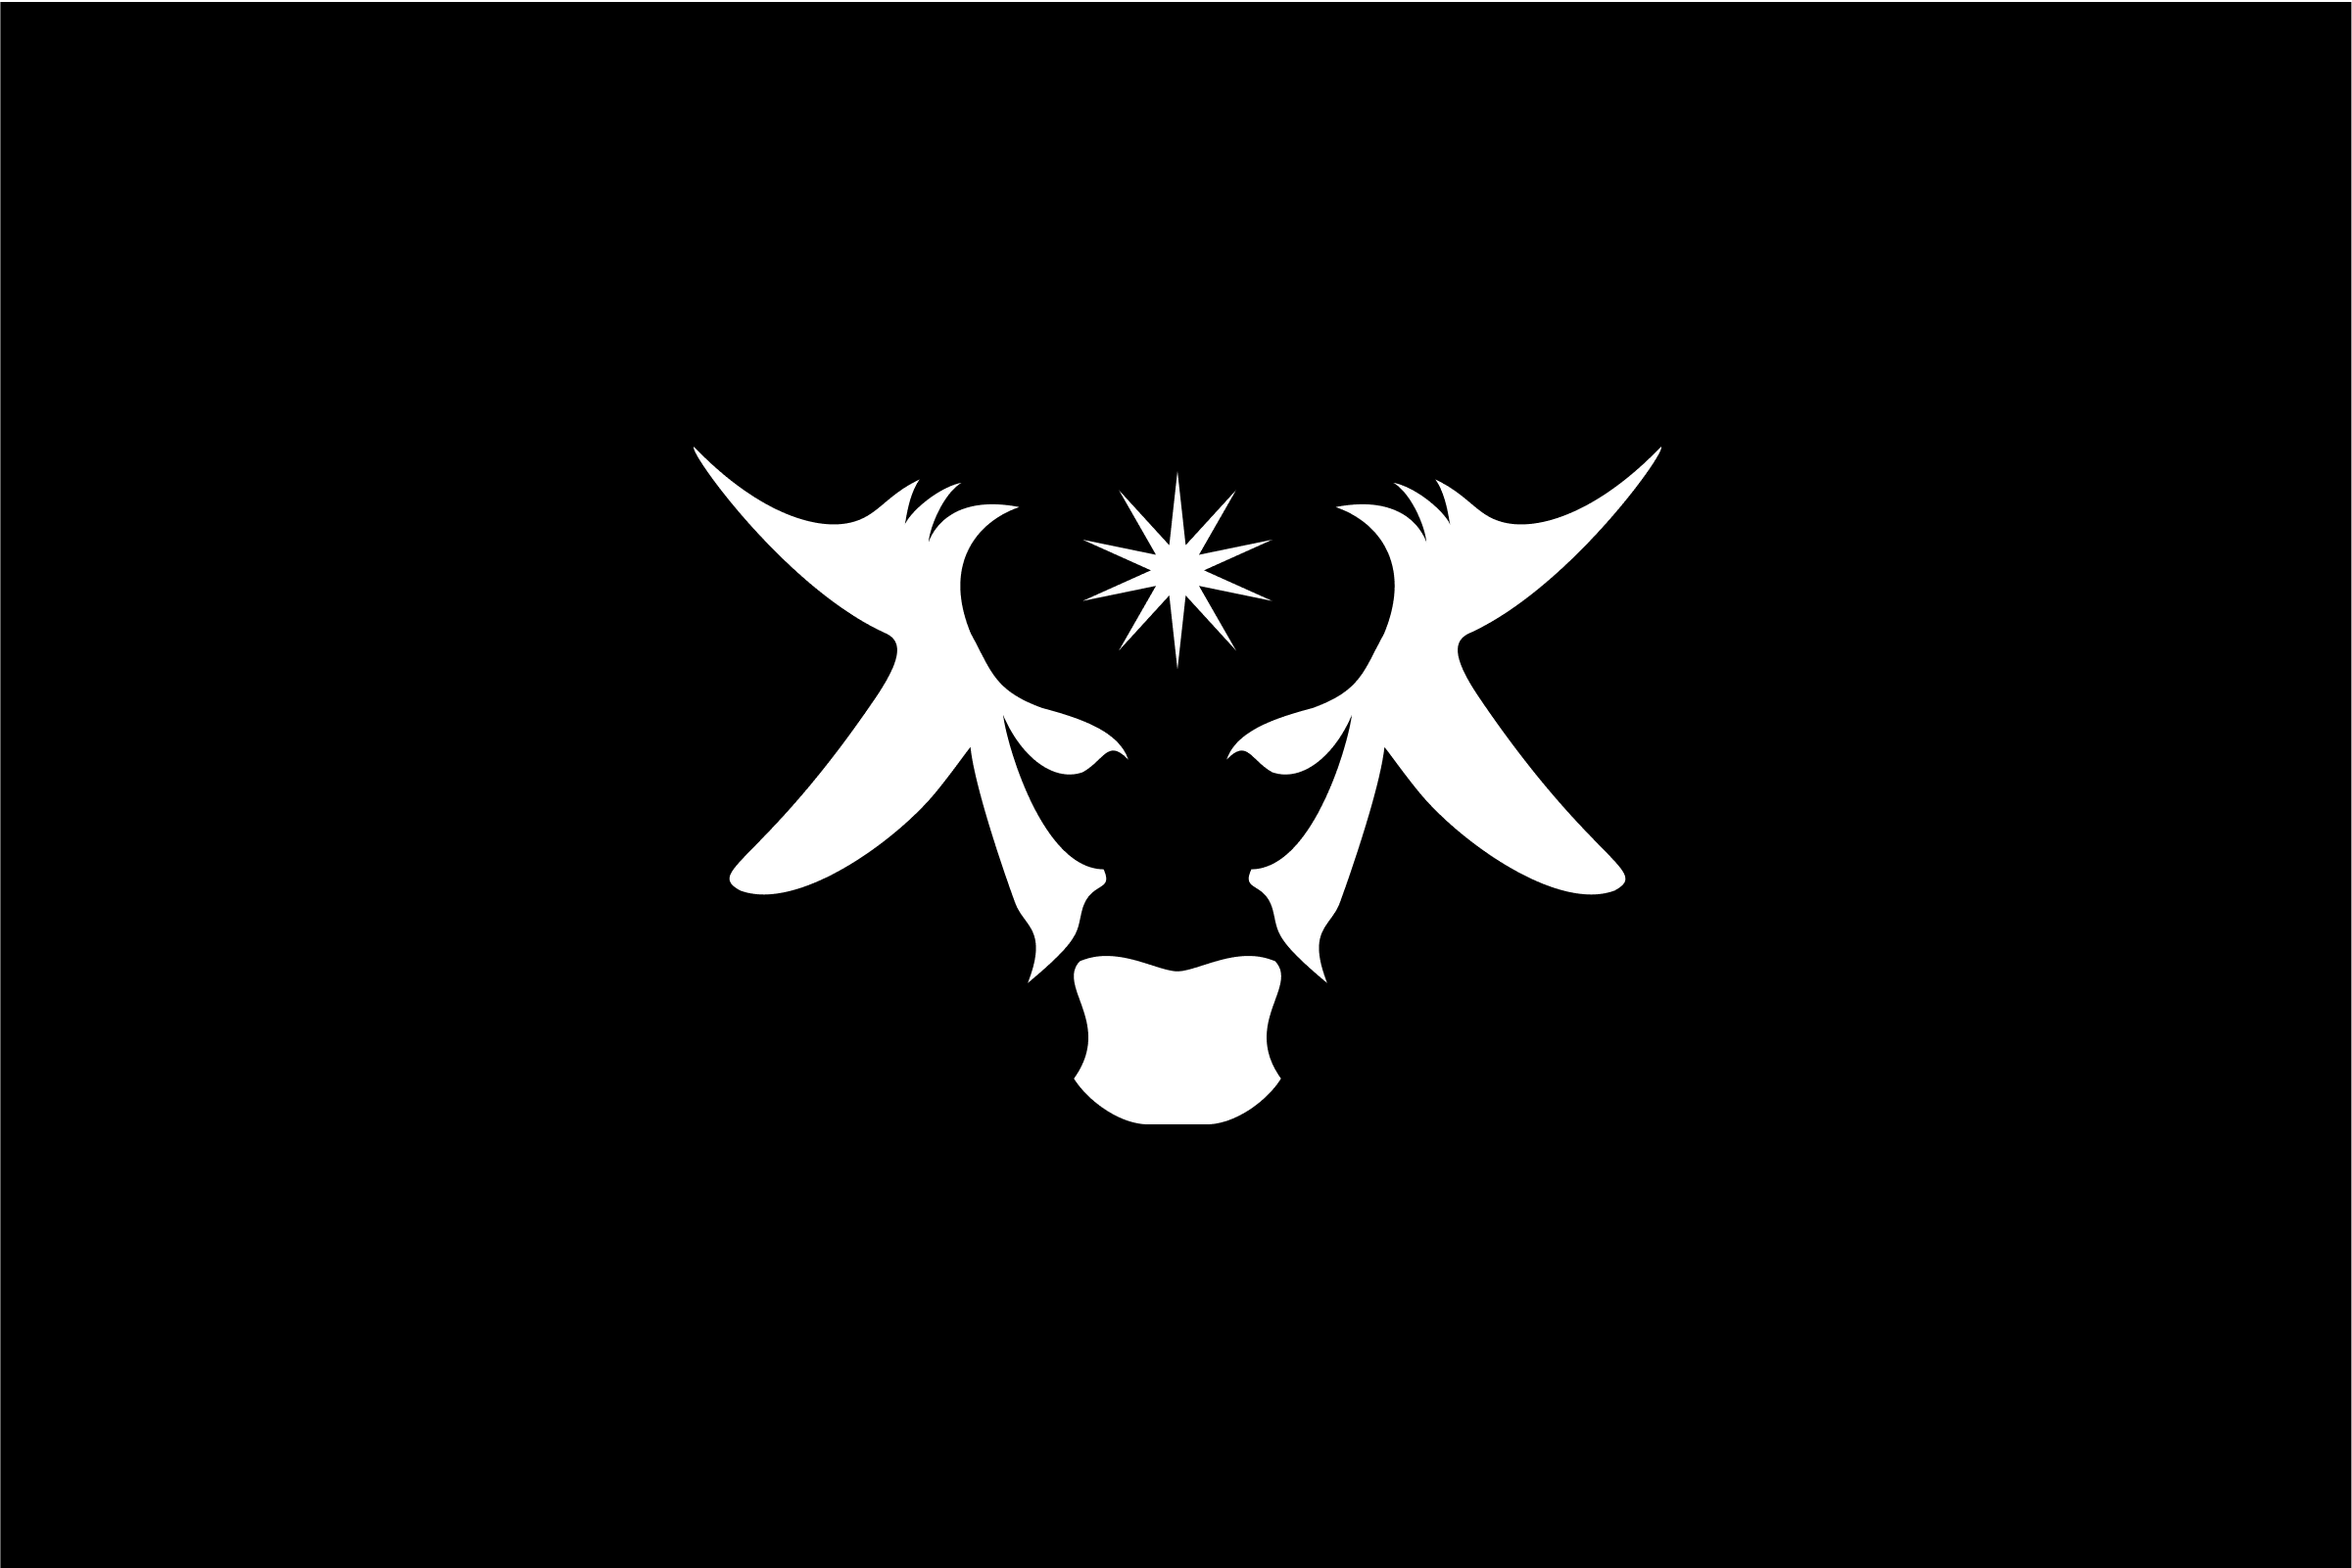 simon-p-coyle-branding-logo-design-2008-sacred-cow-productions